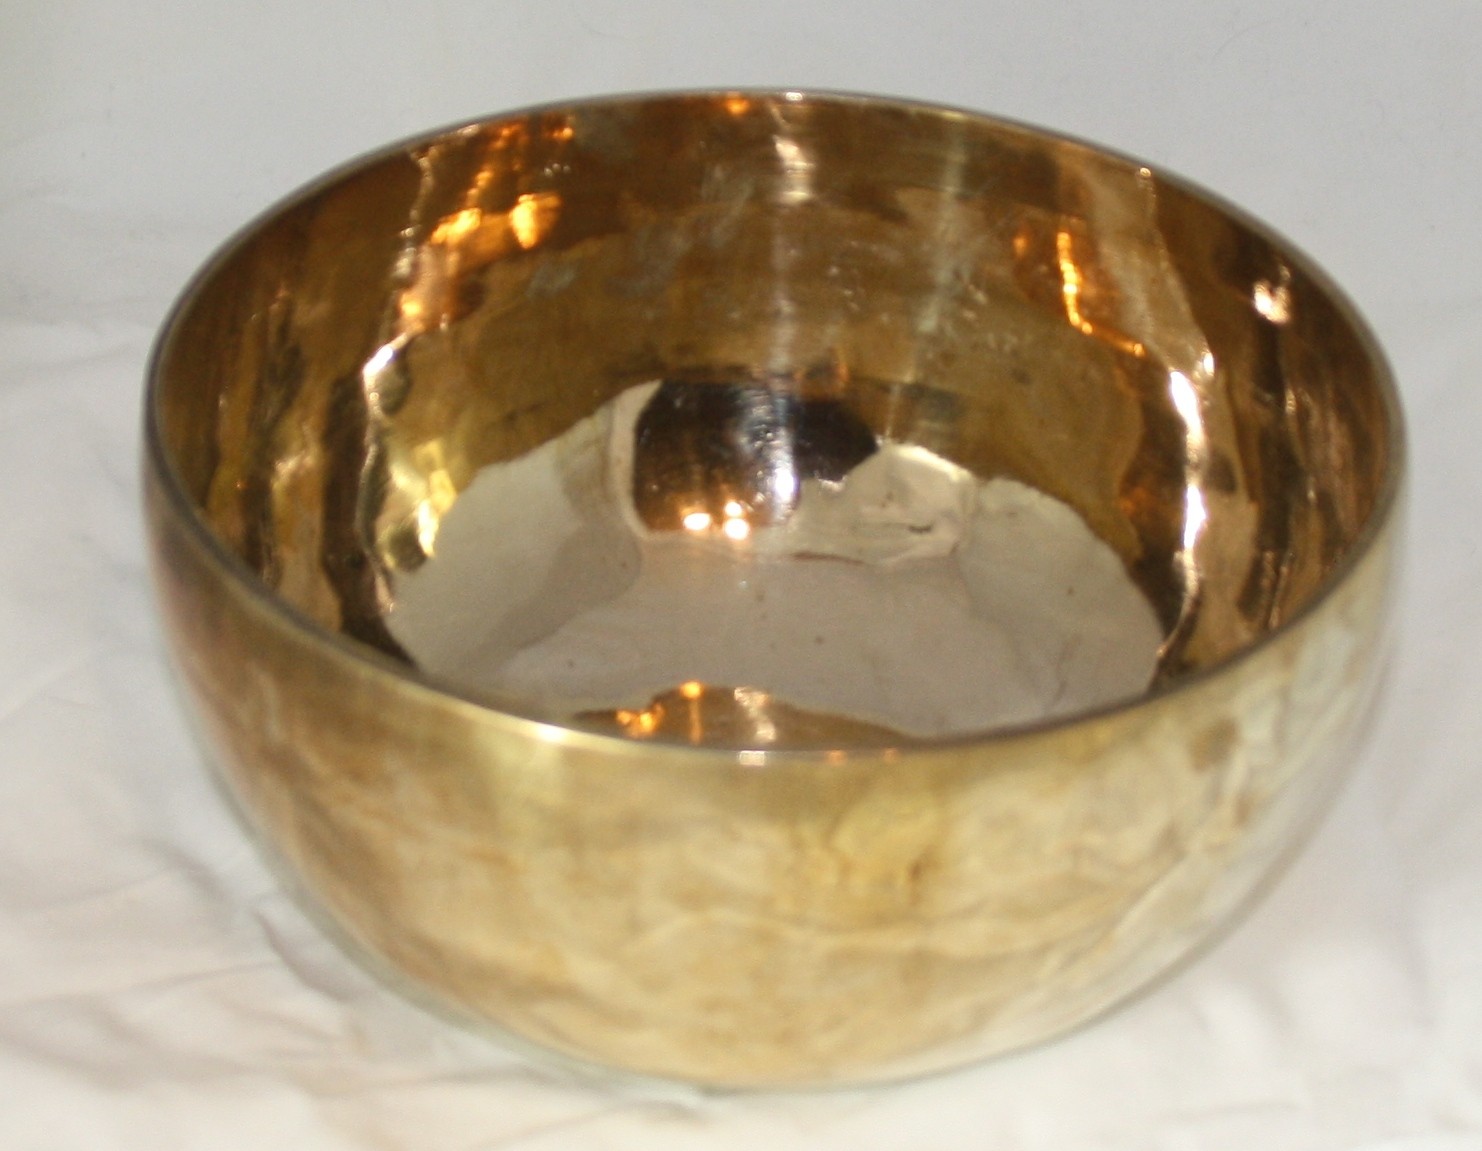 Shiny Brass Singing Bowl